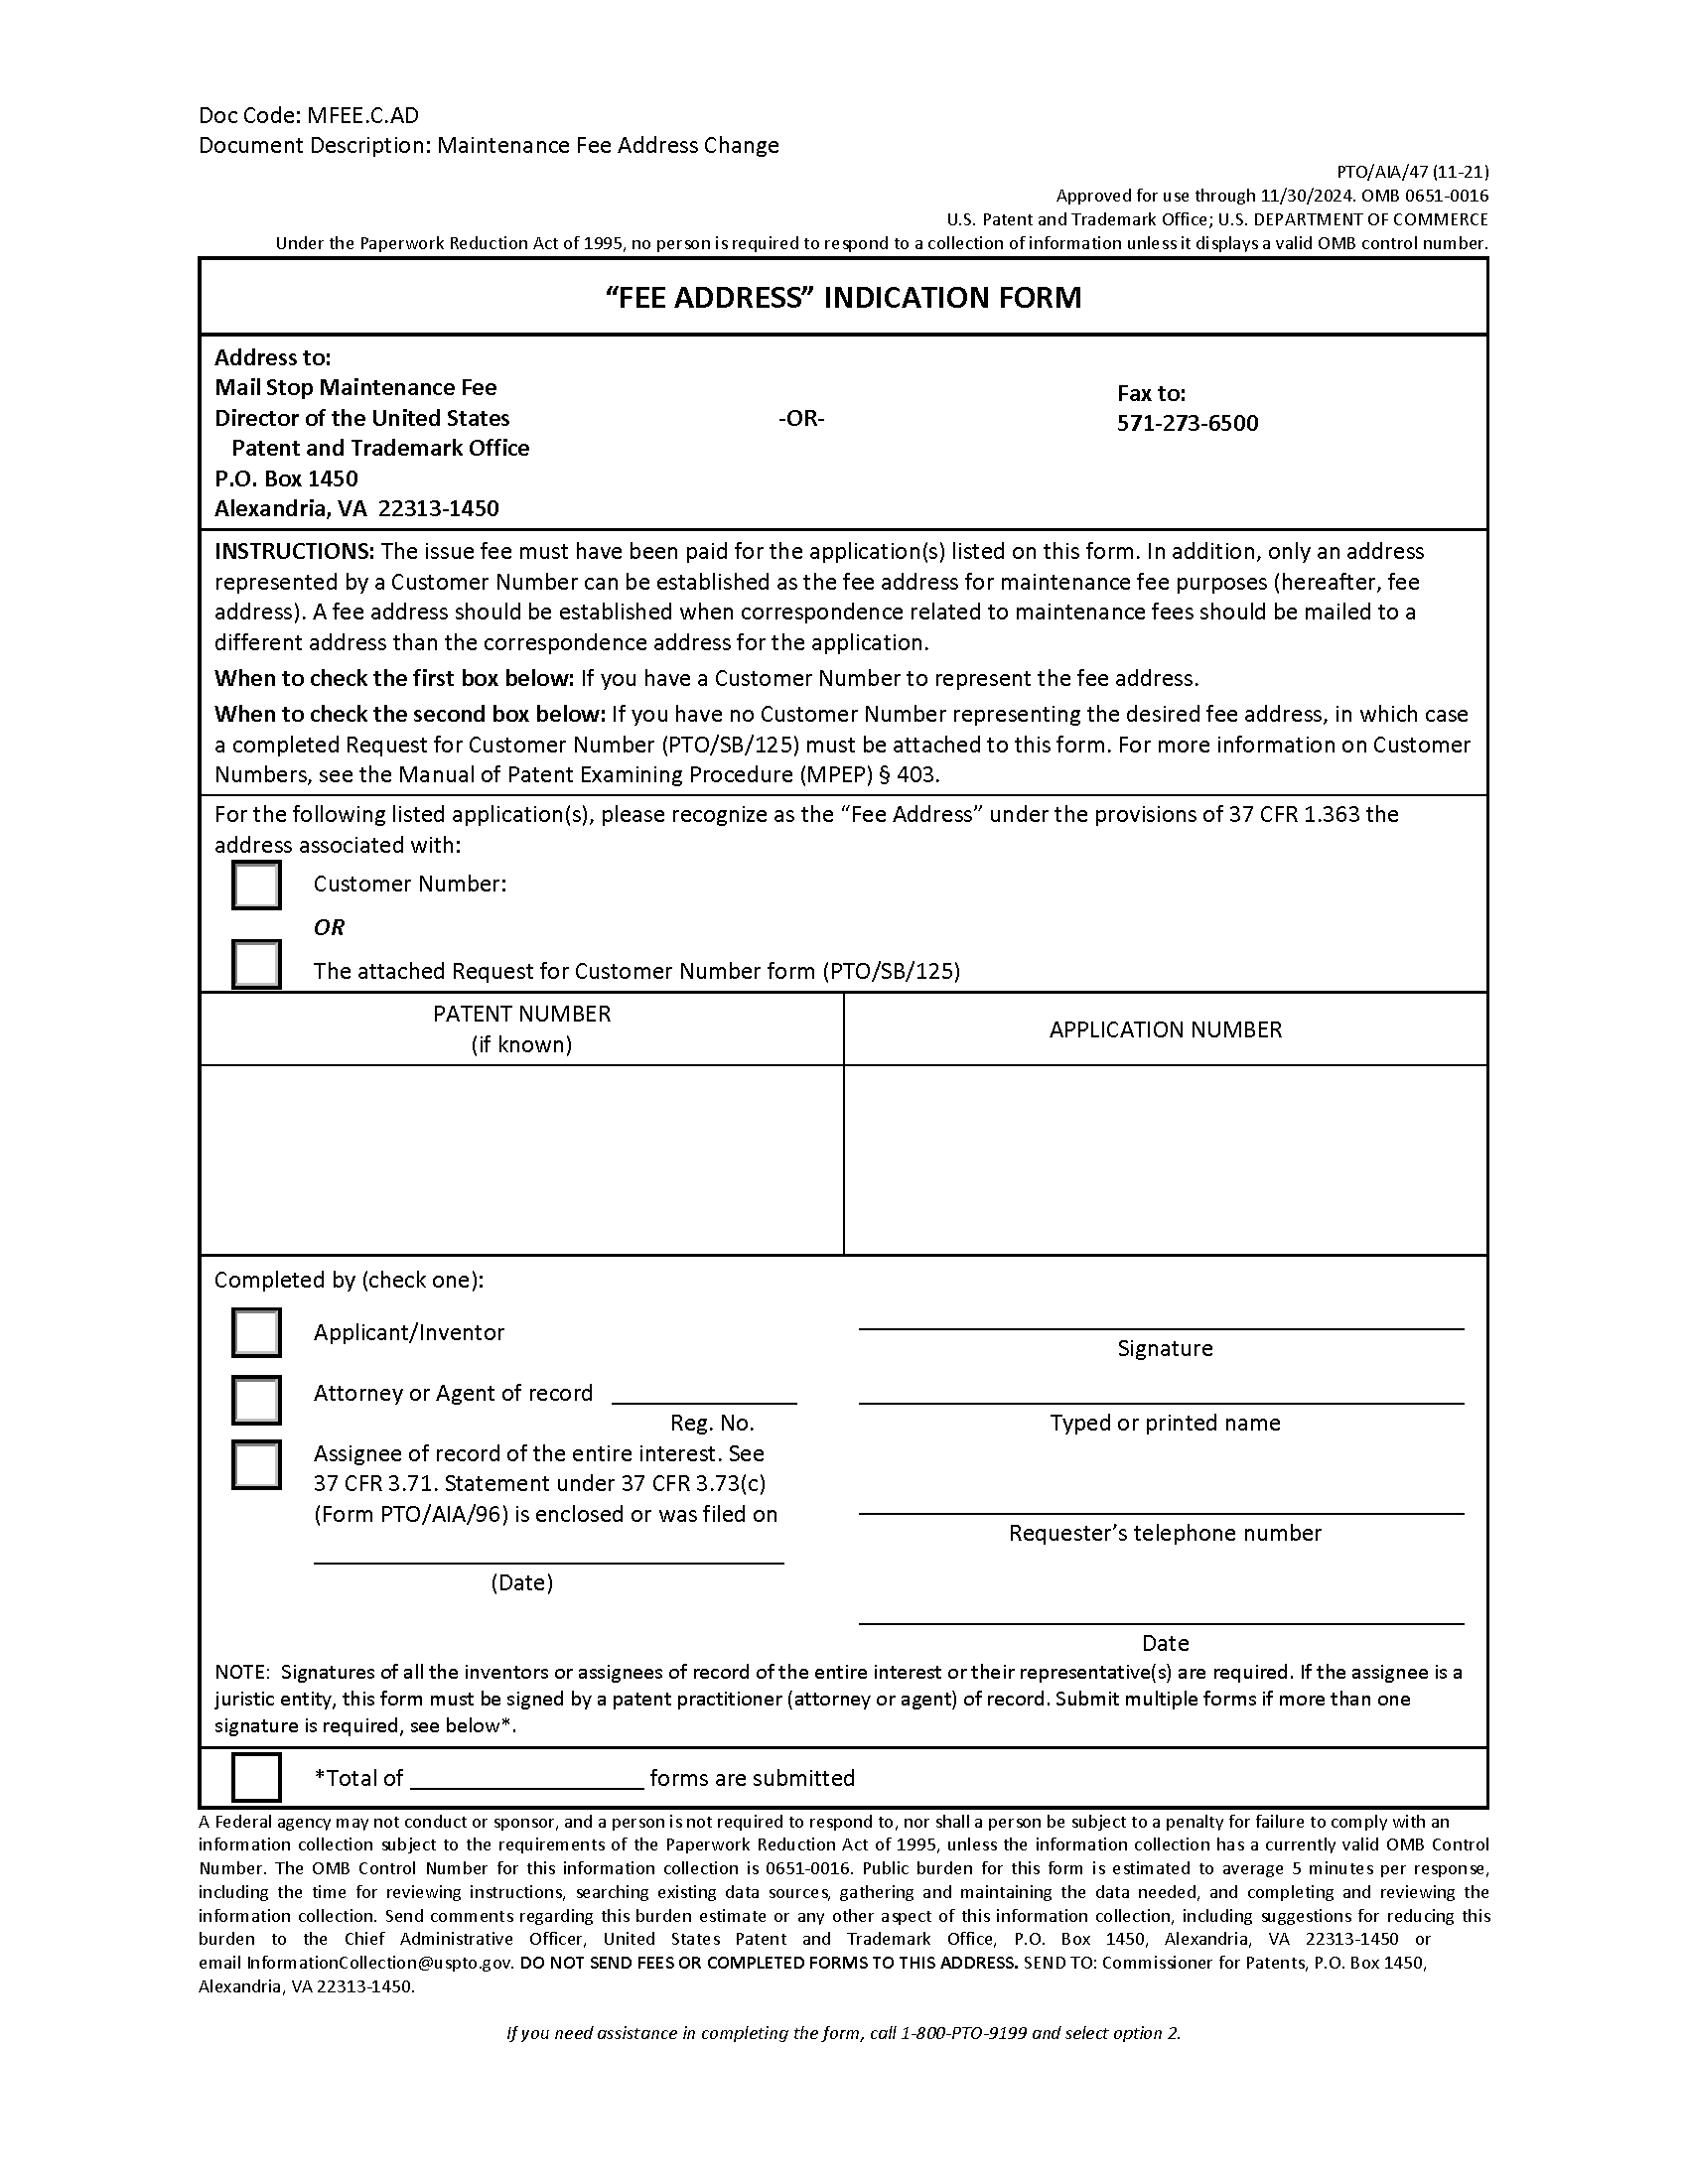 Fee Address Indication Form (PTO/SB/47)